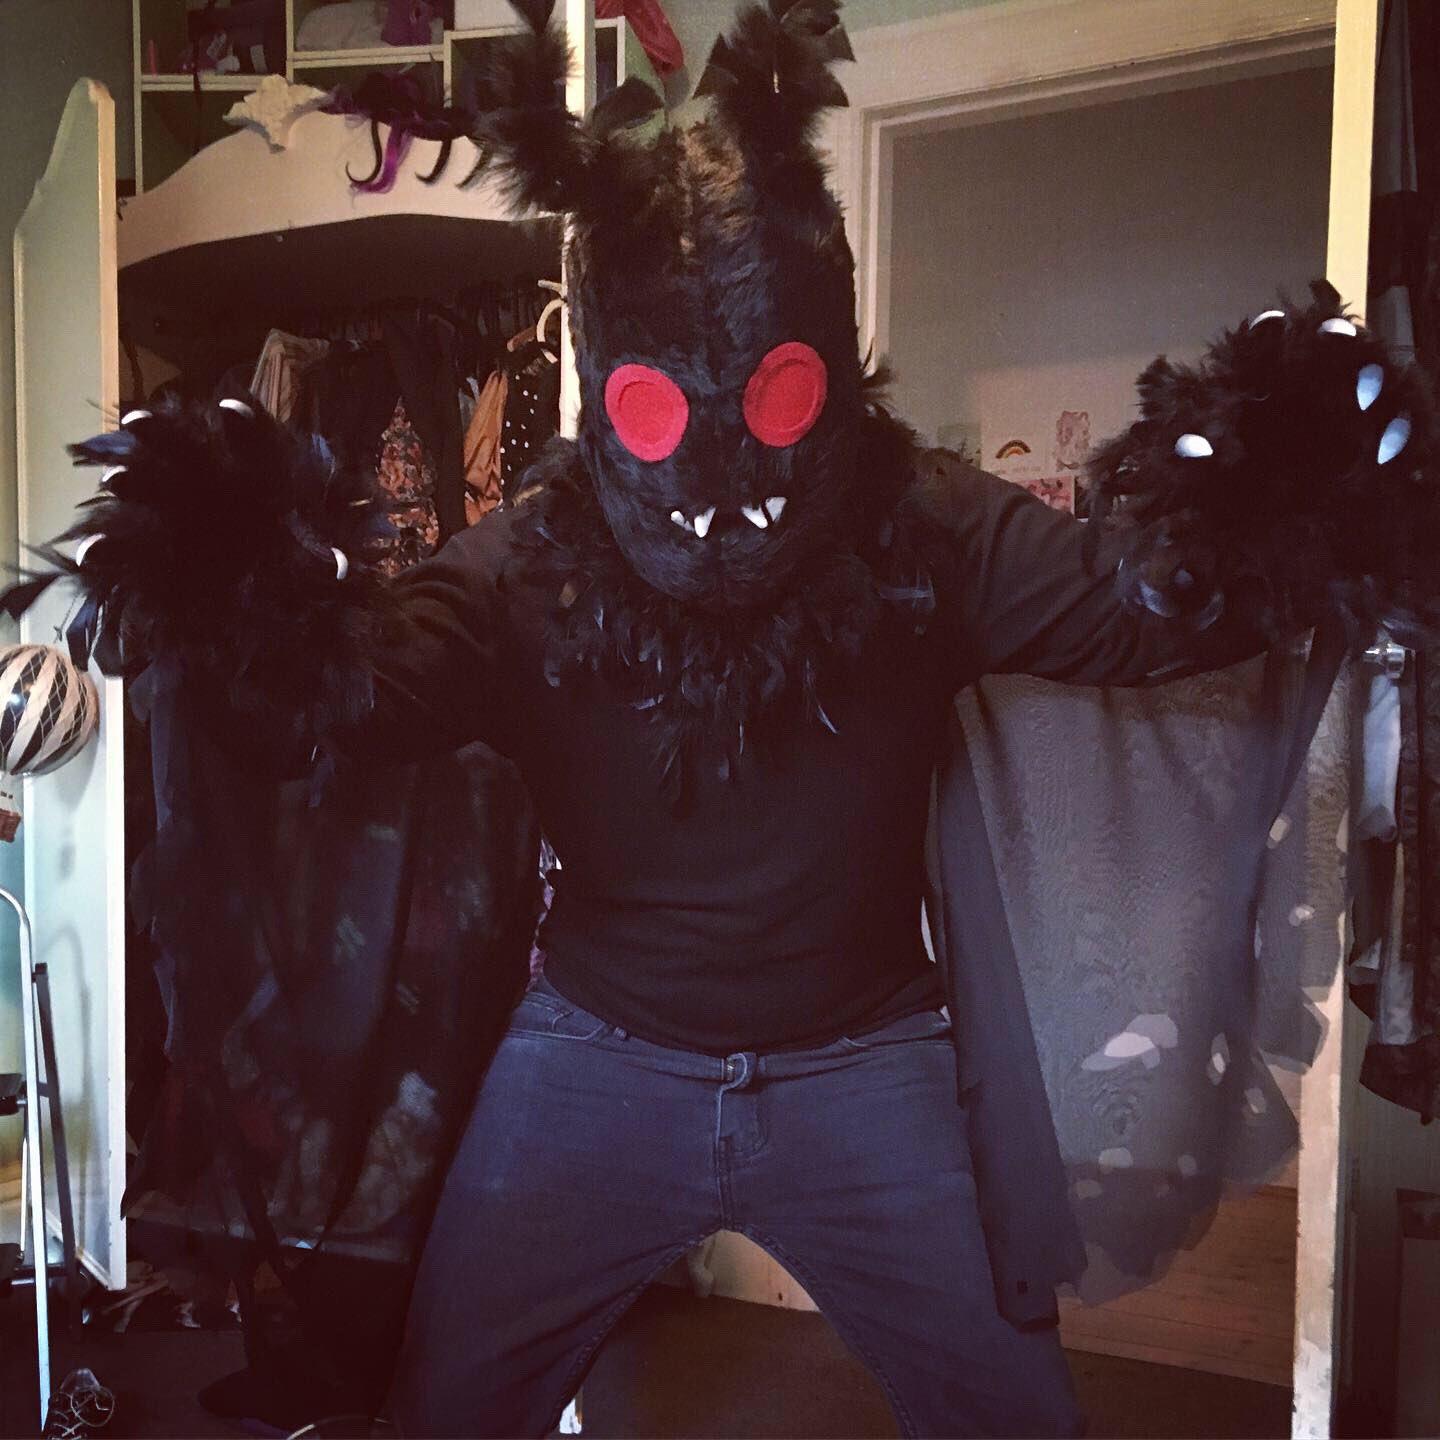 FAKE EMO TWEETER on X: "Homemade Mothman costume for Halloween #mothman #Halloween #DIY https://t.co/3DjaM2lSkr" / X